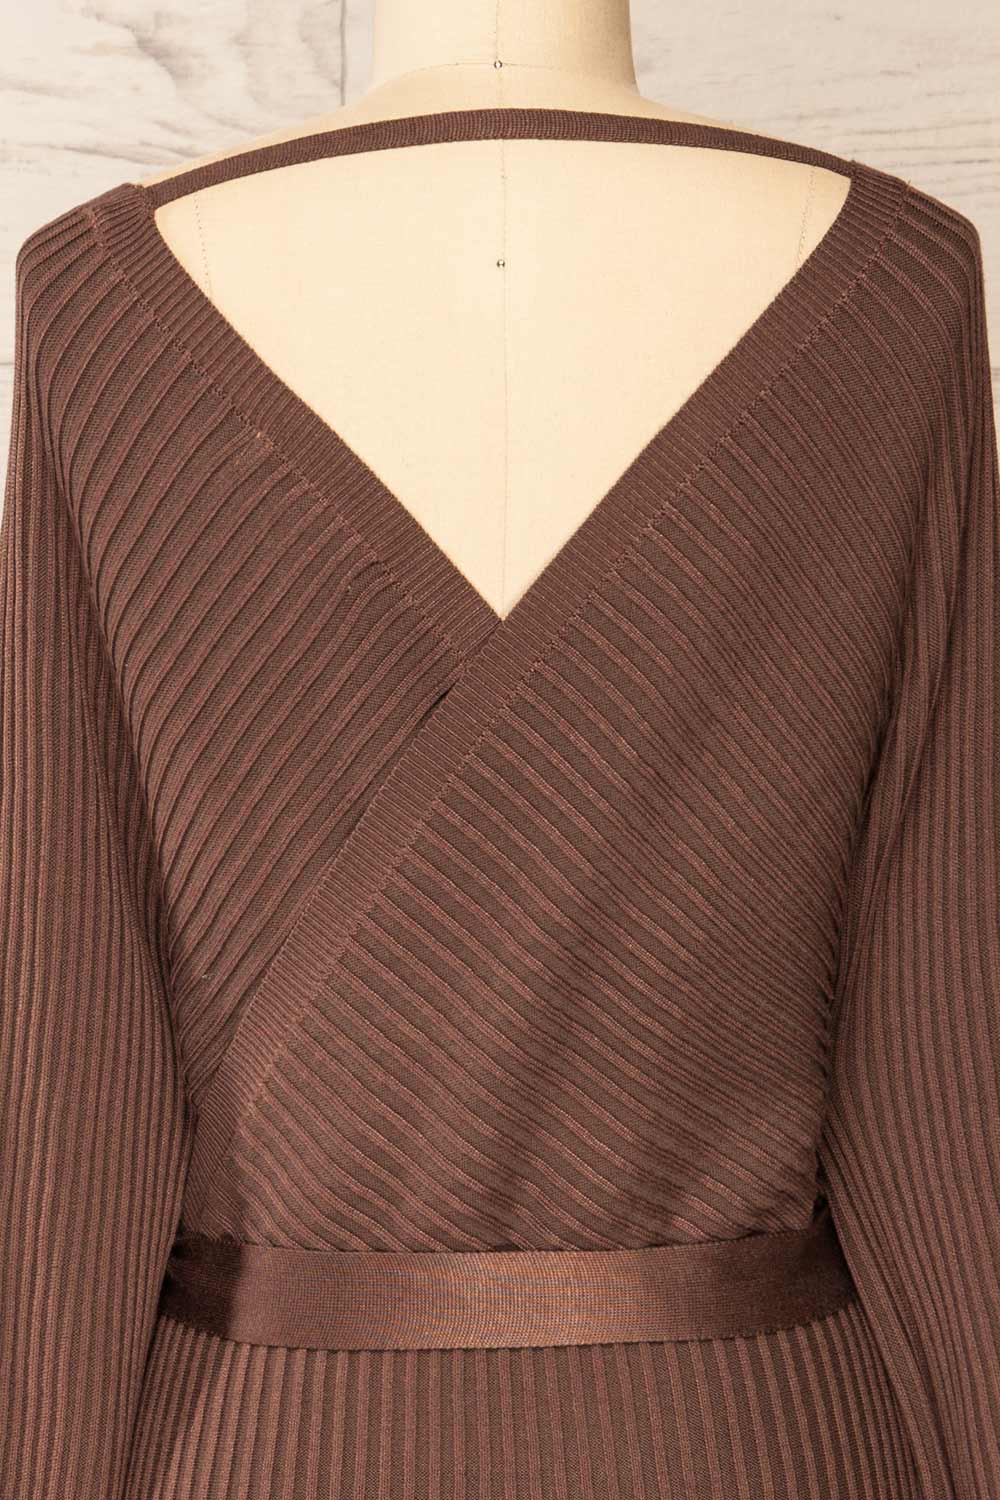 Bergame Chocolate Knitted Wrap Dress | La petite garçonne back close-up